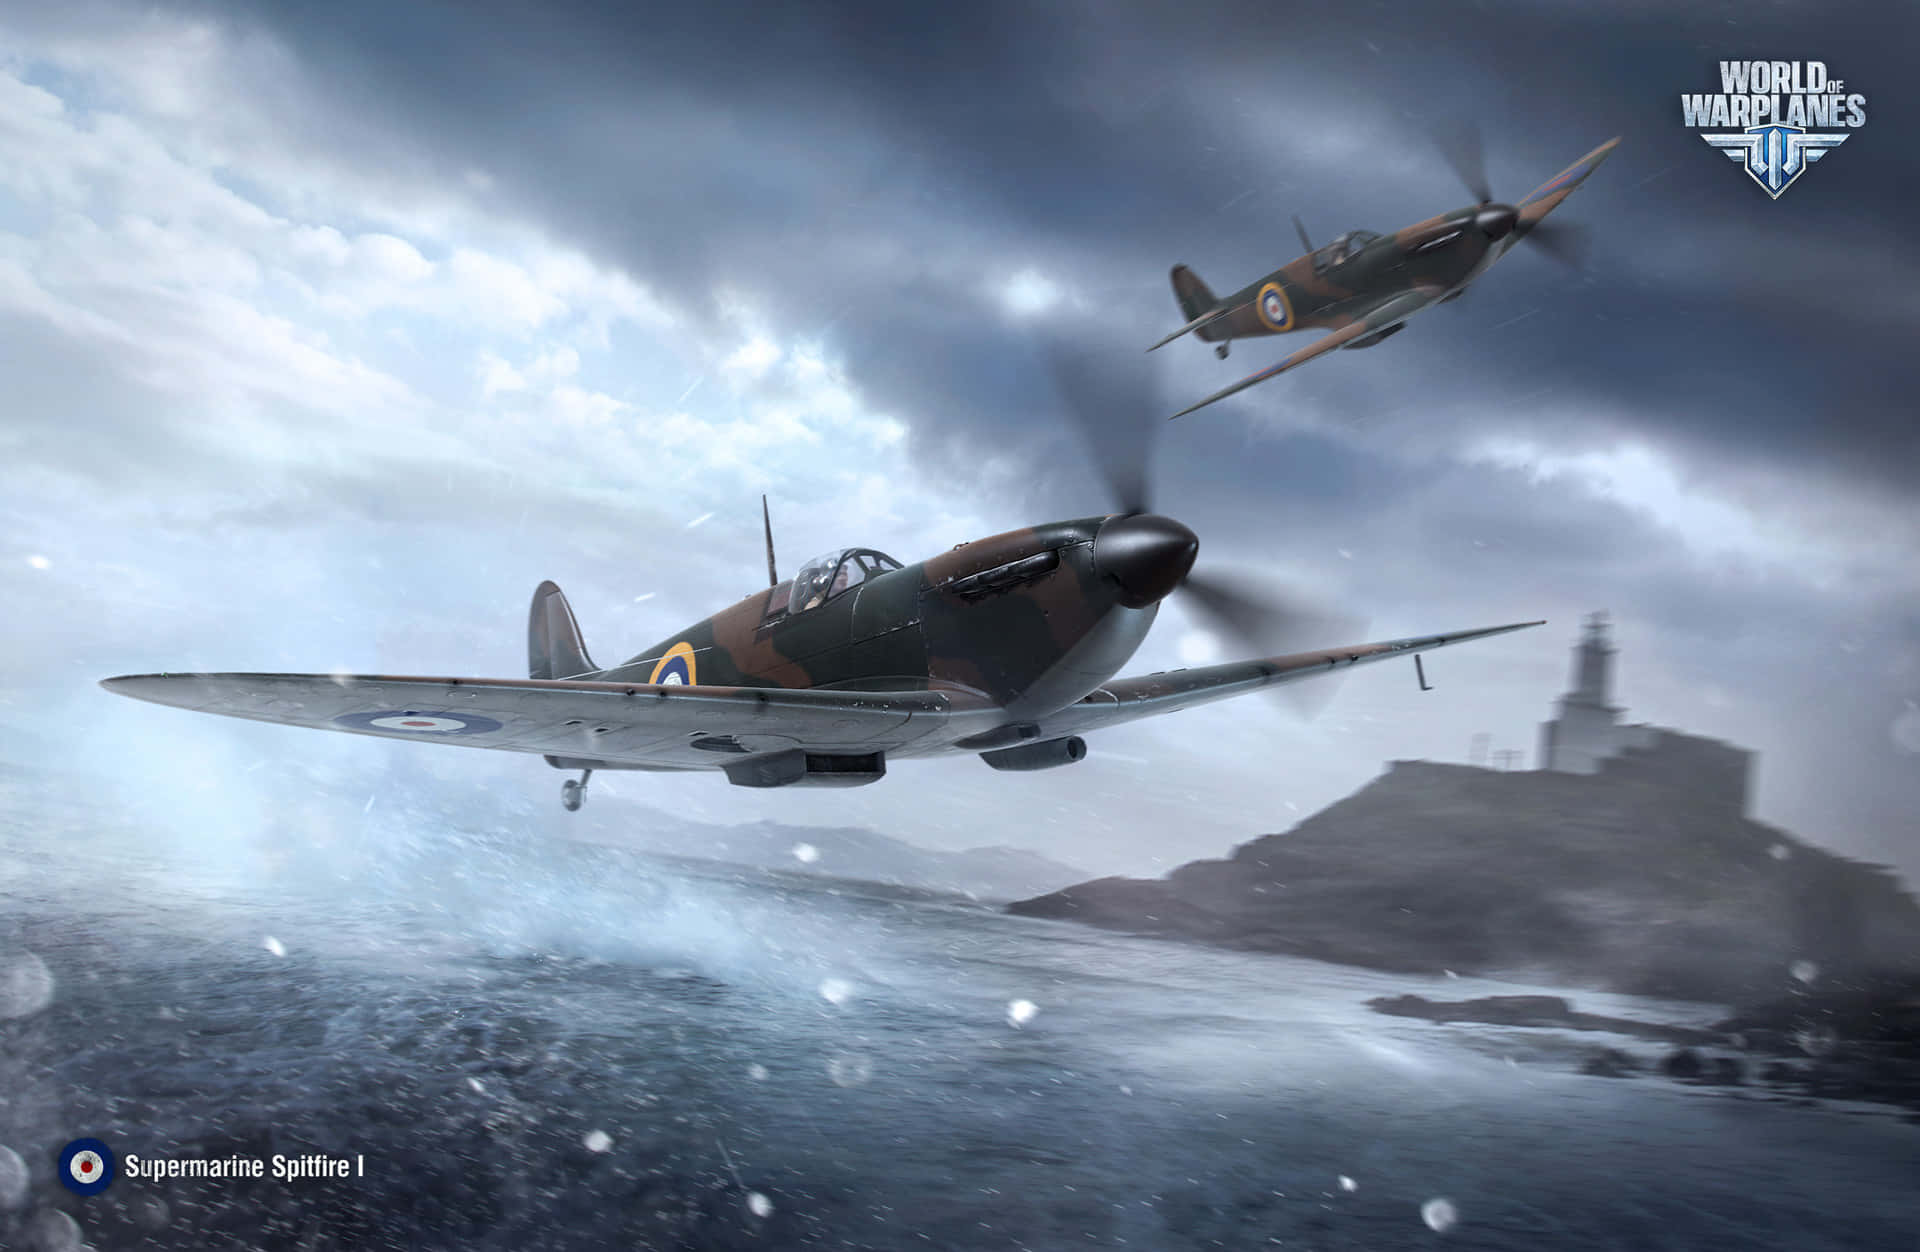 En Spitfire krigsfly fra 2. verdenskrig som suser gennem himlen. Wallpaper